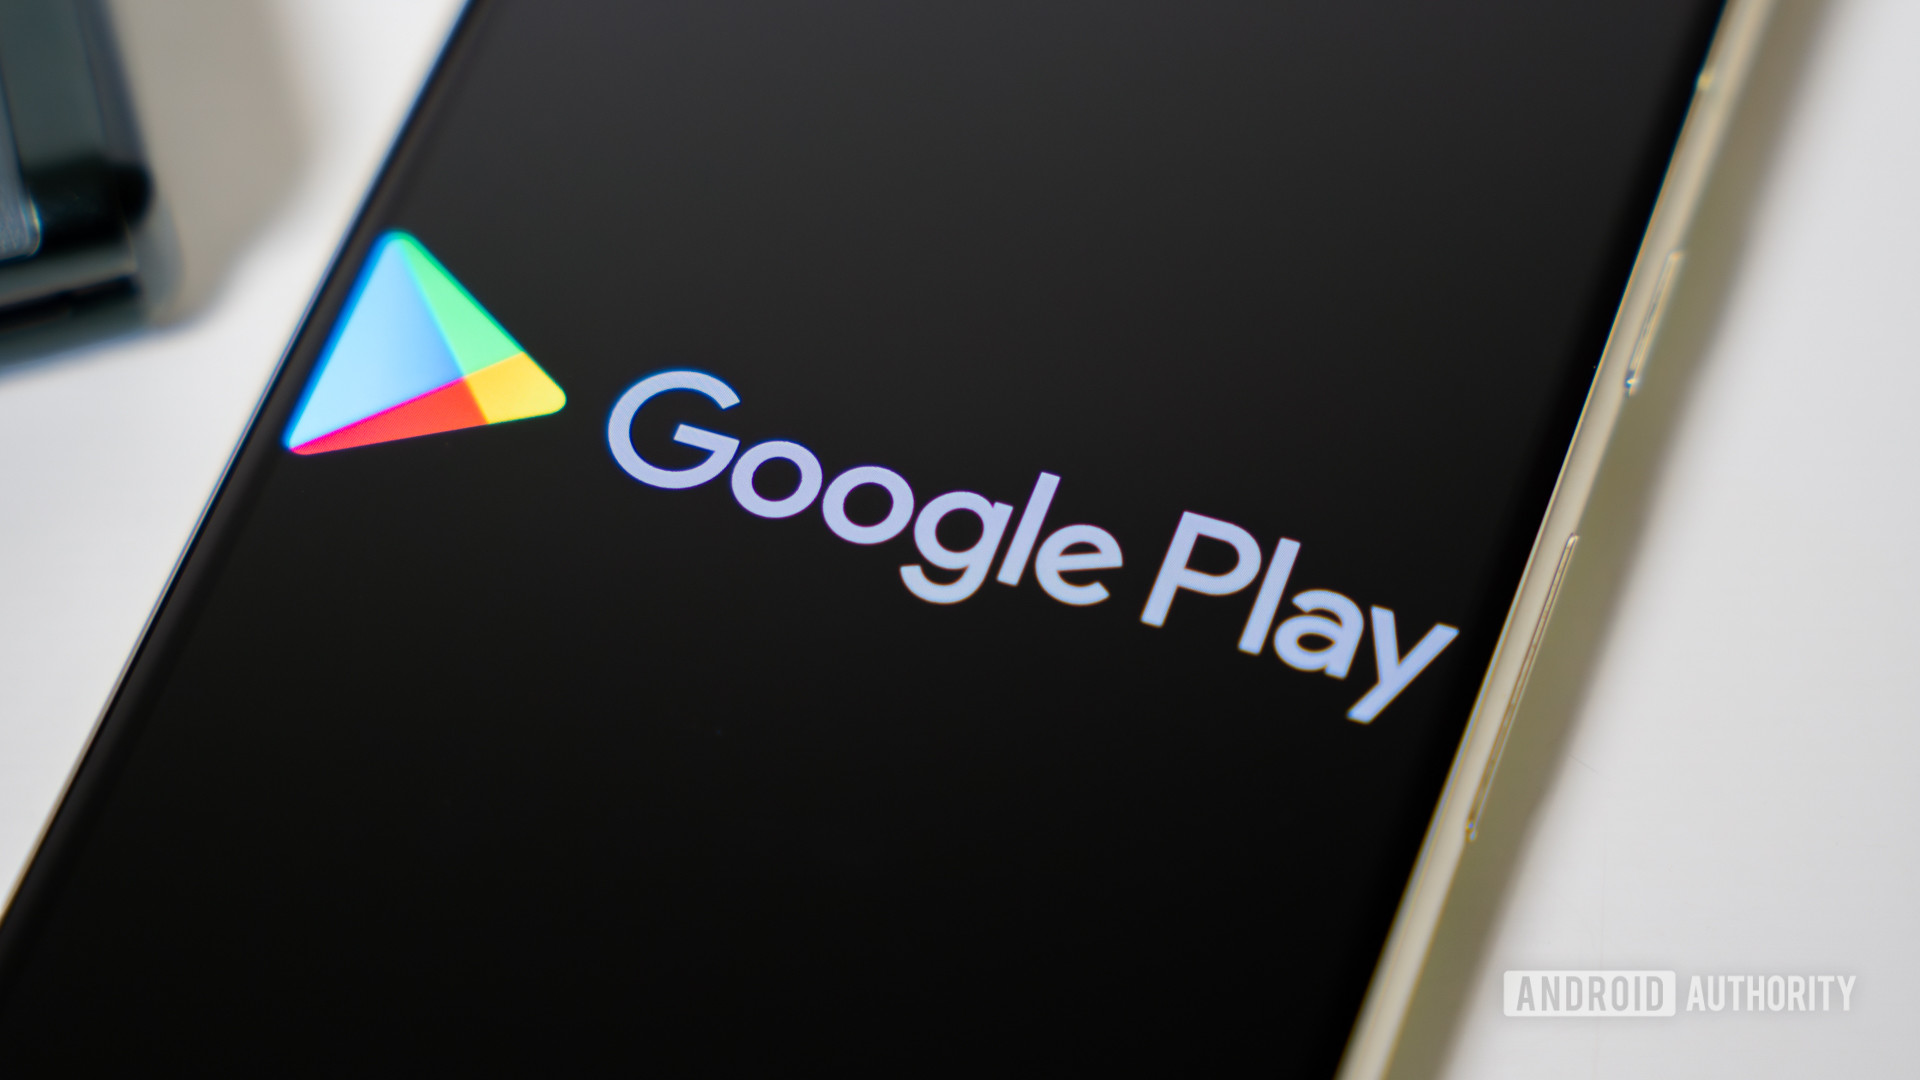 Google Play Store logo on smartphone stock photo (2)